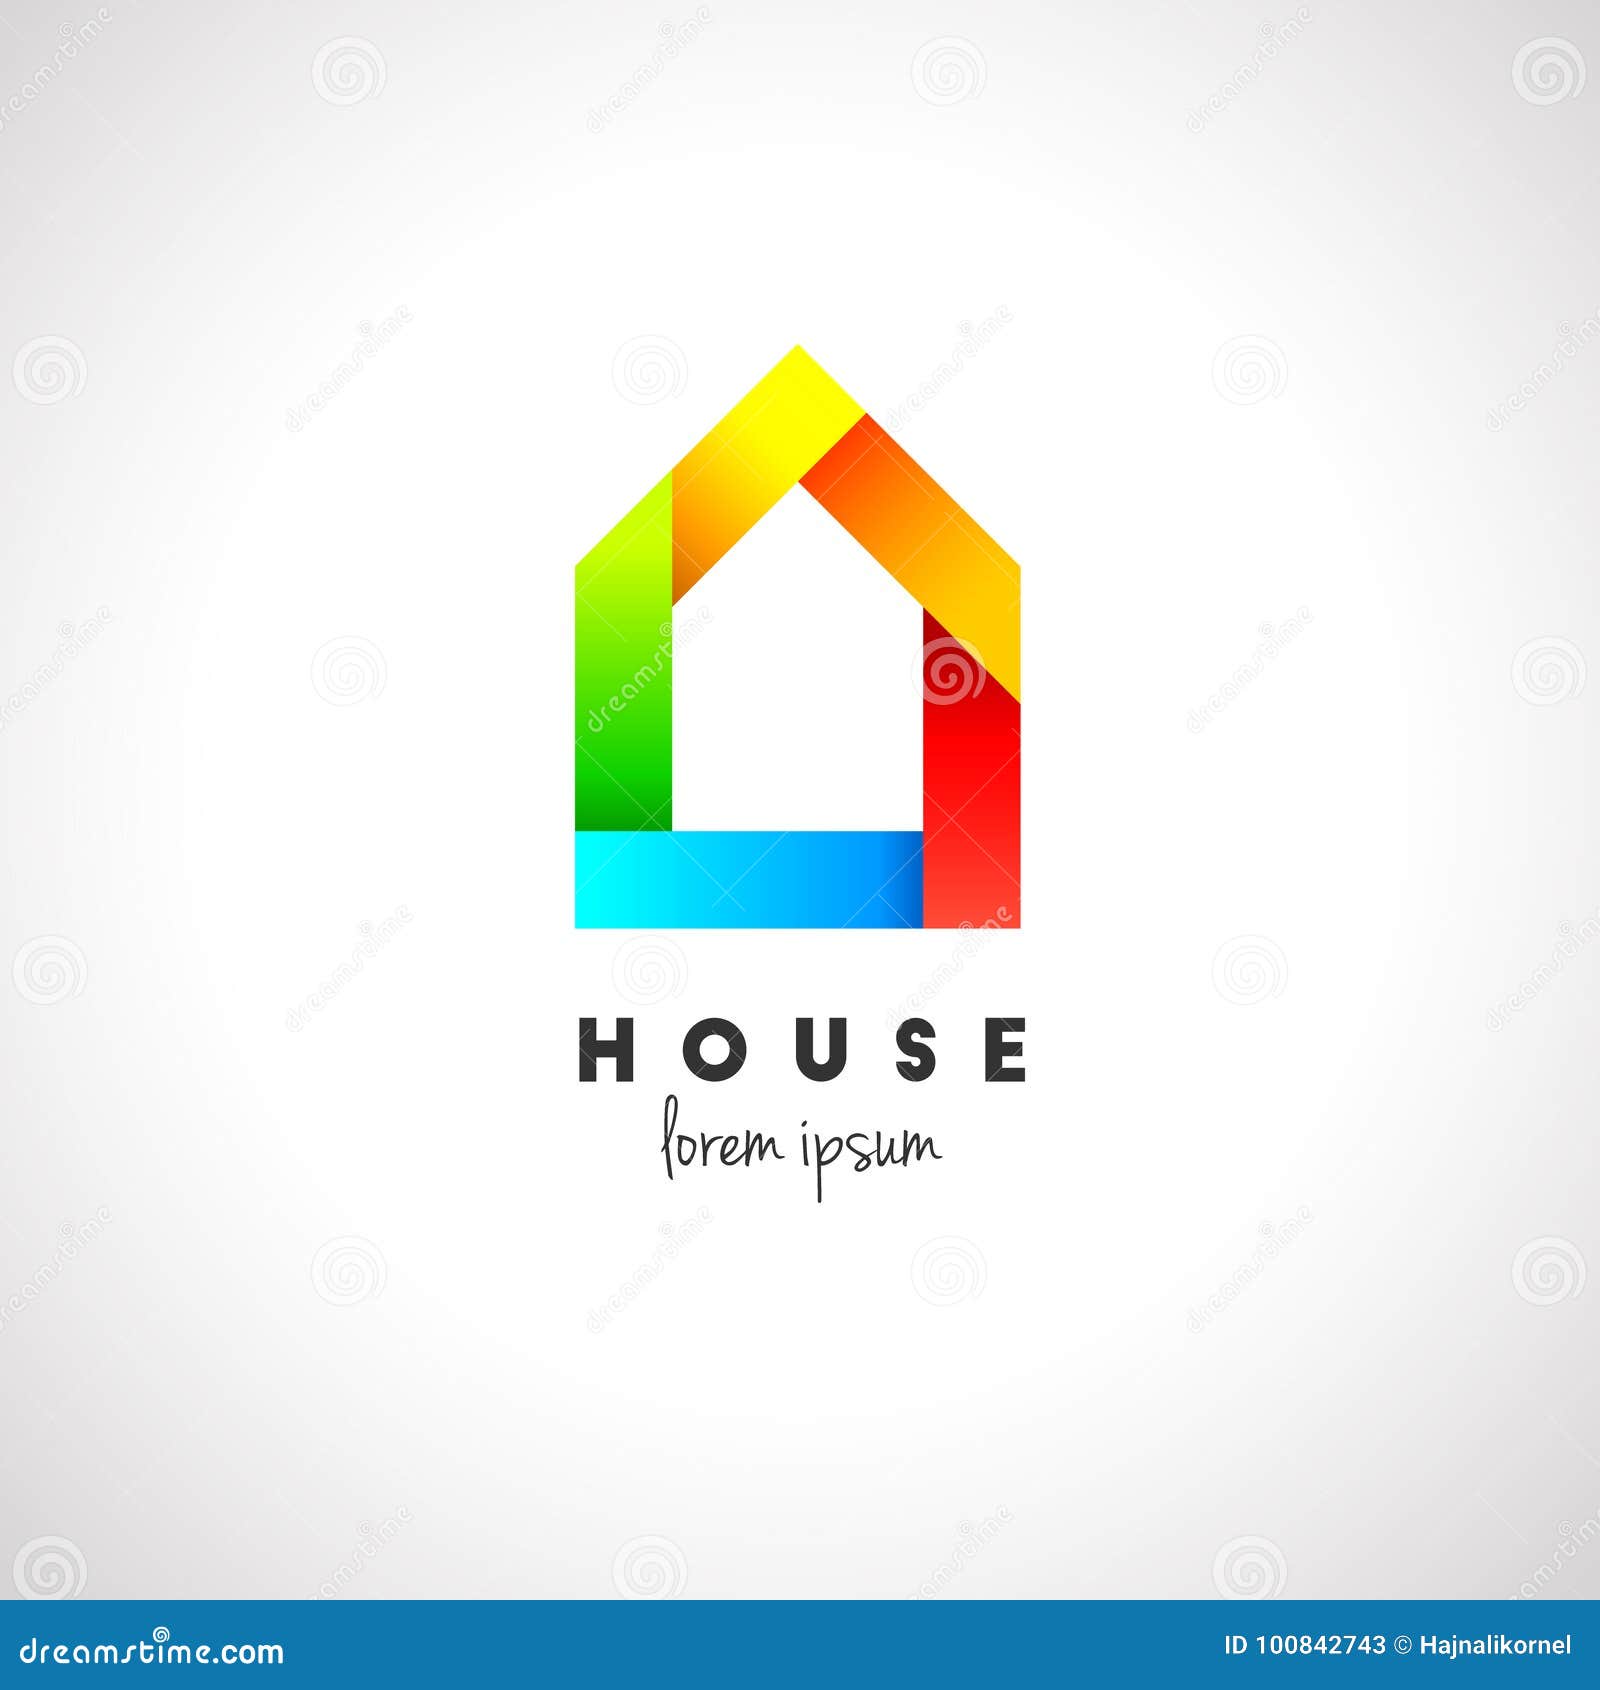 Creative house logo design stock vector. Illustration of color ...